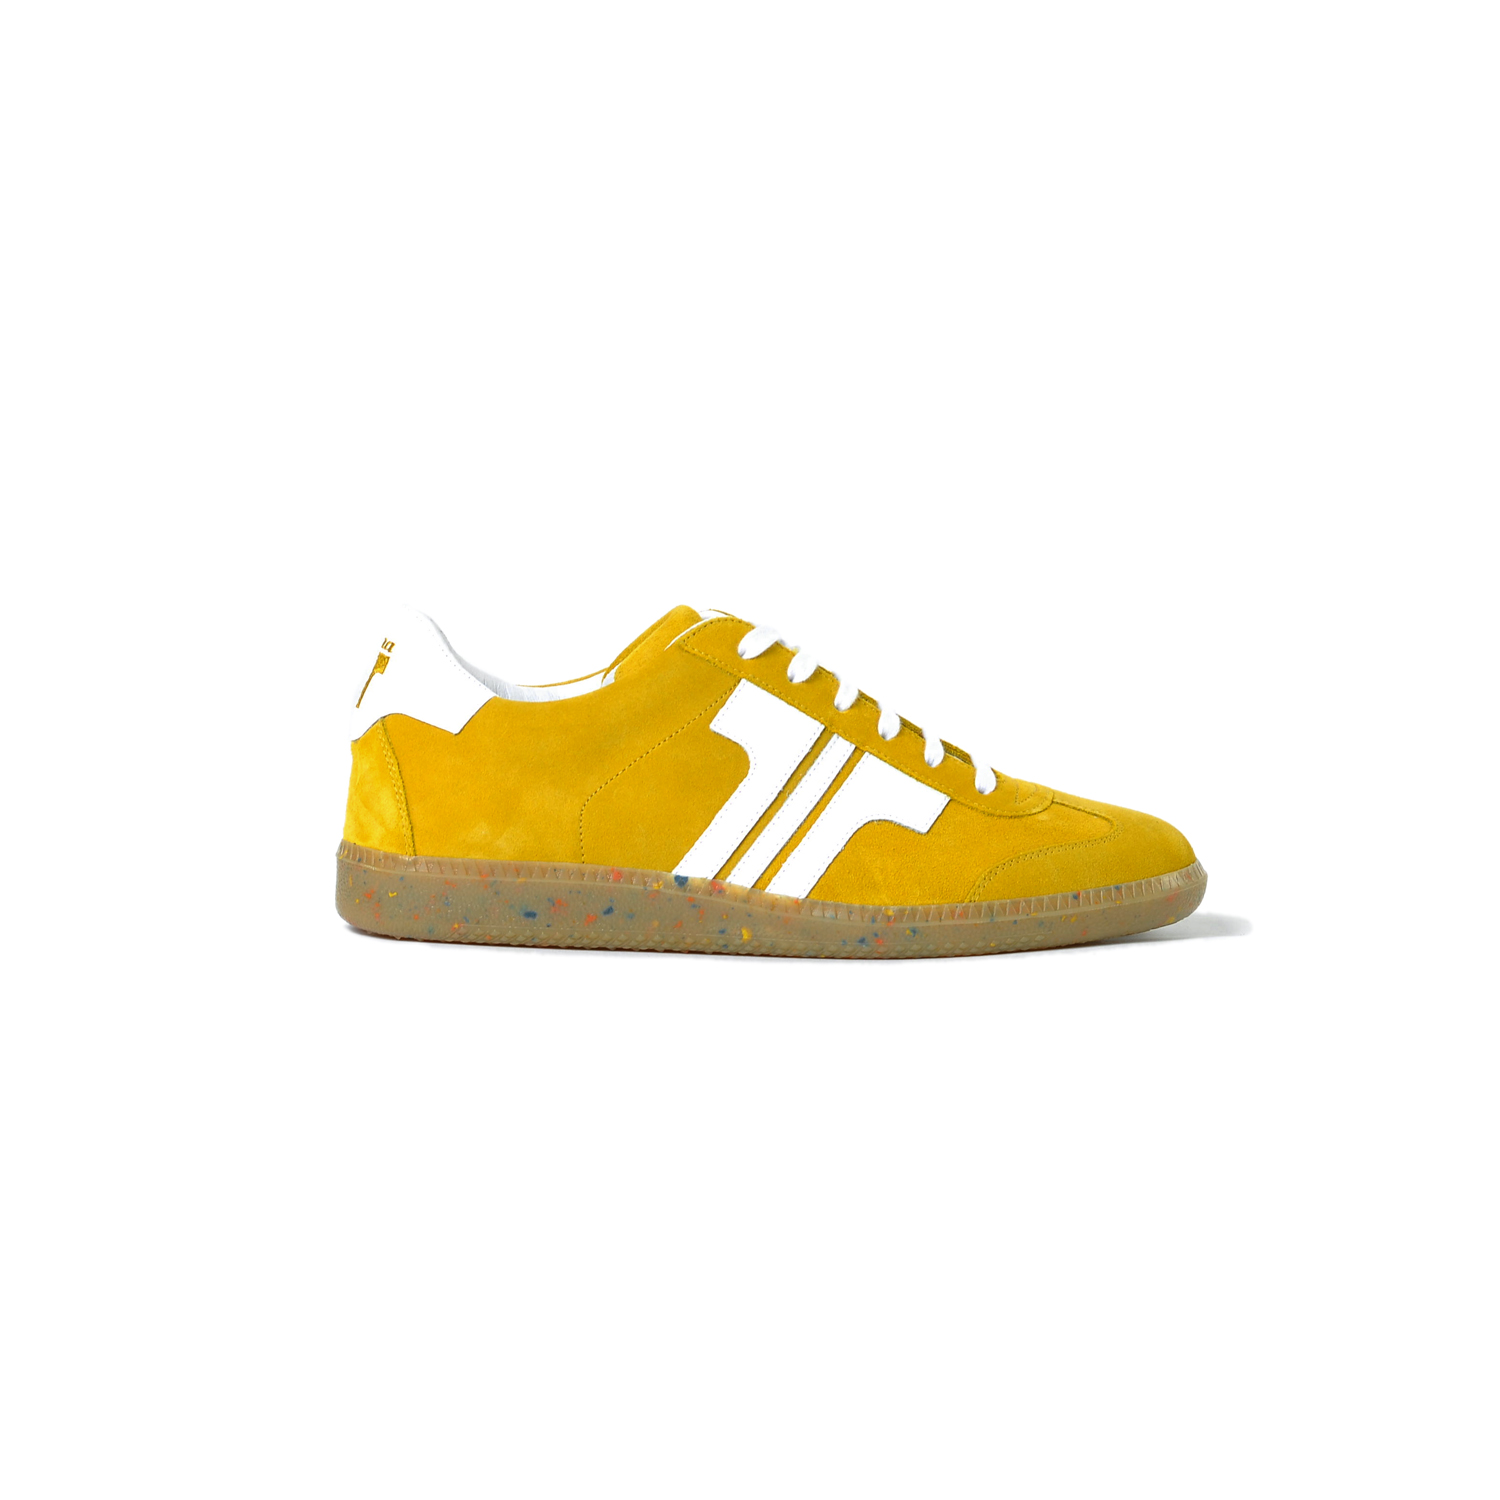 Tisza shoes - Comfort - Mustard-white